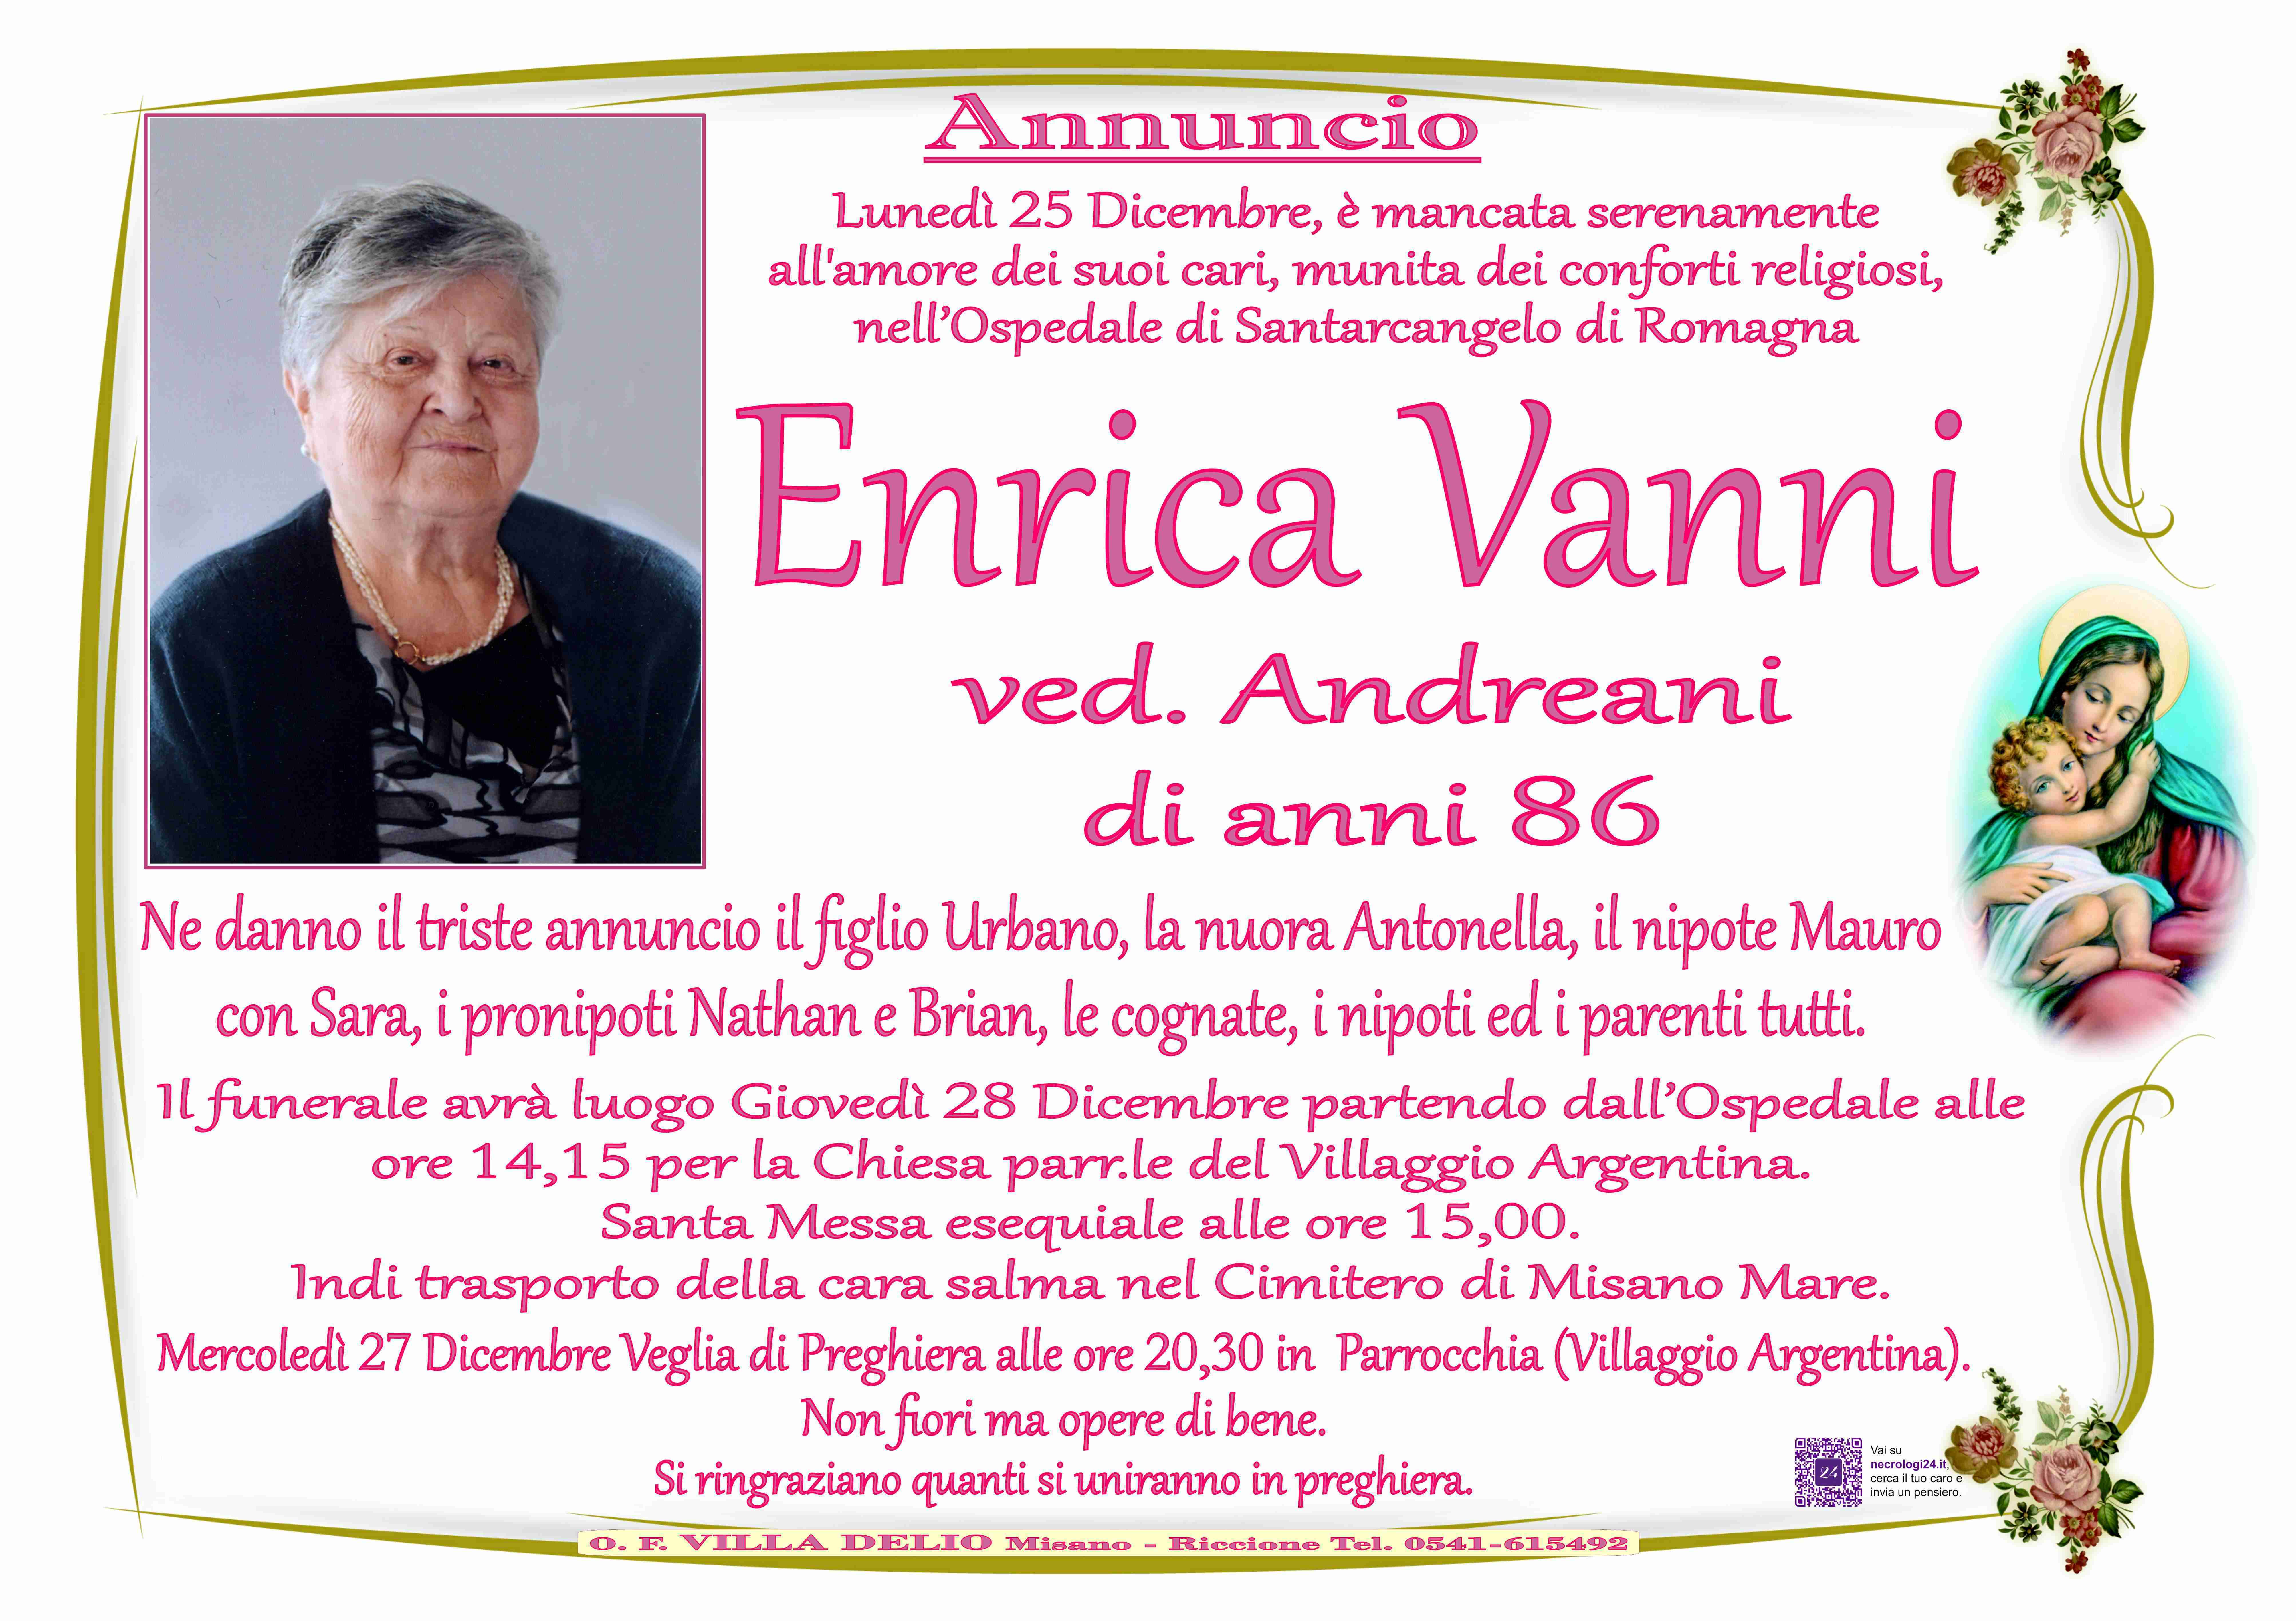 Enrica Vanni